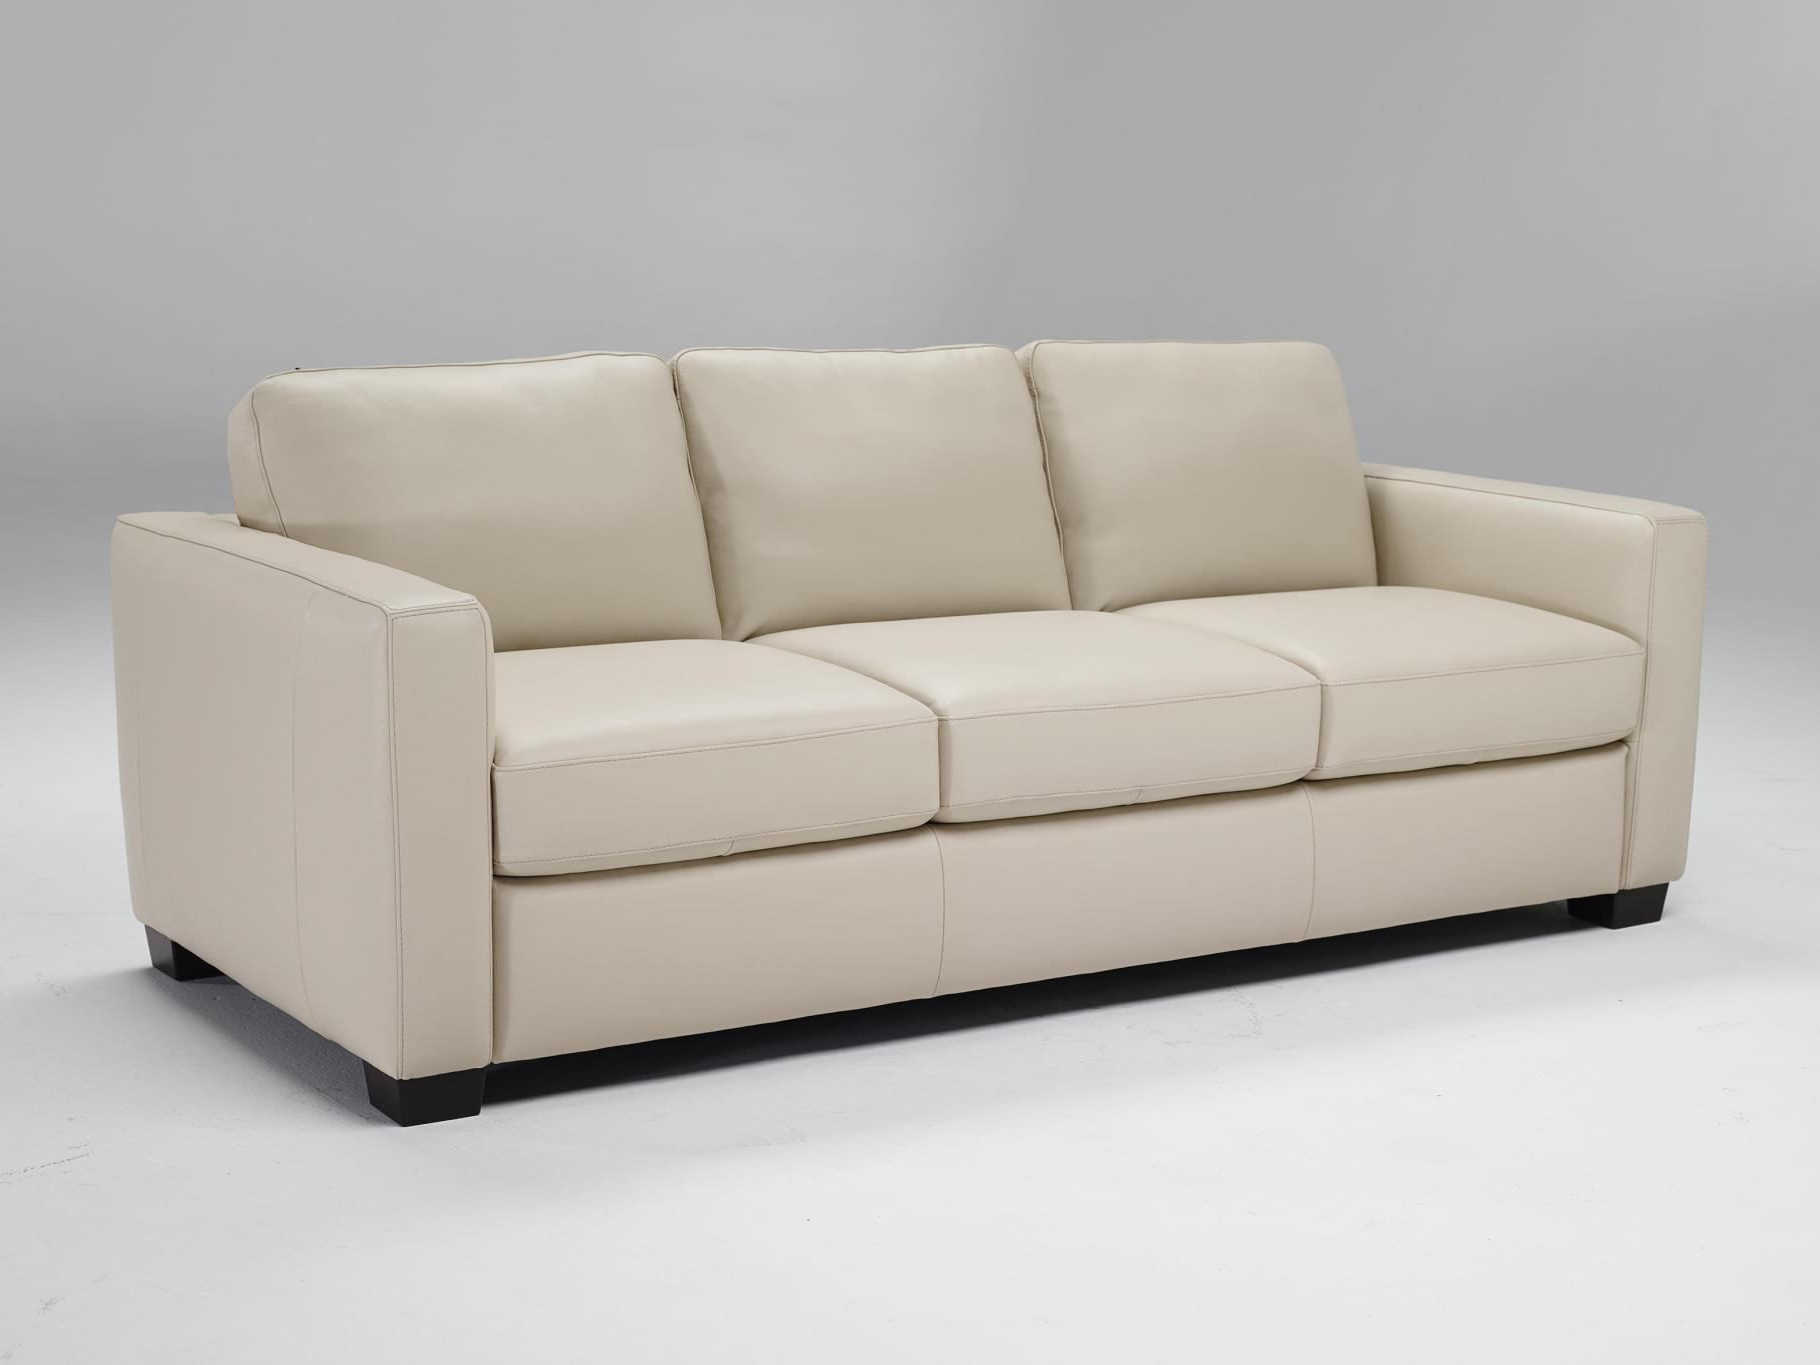 natuzzi leather sofa cushion replacement